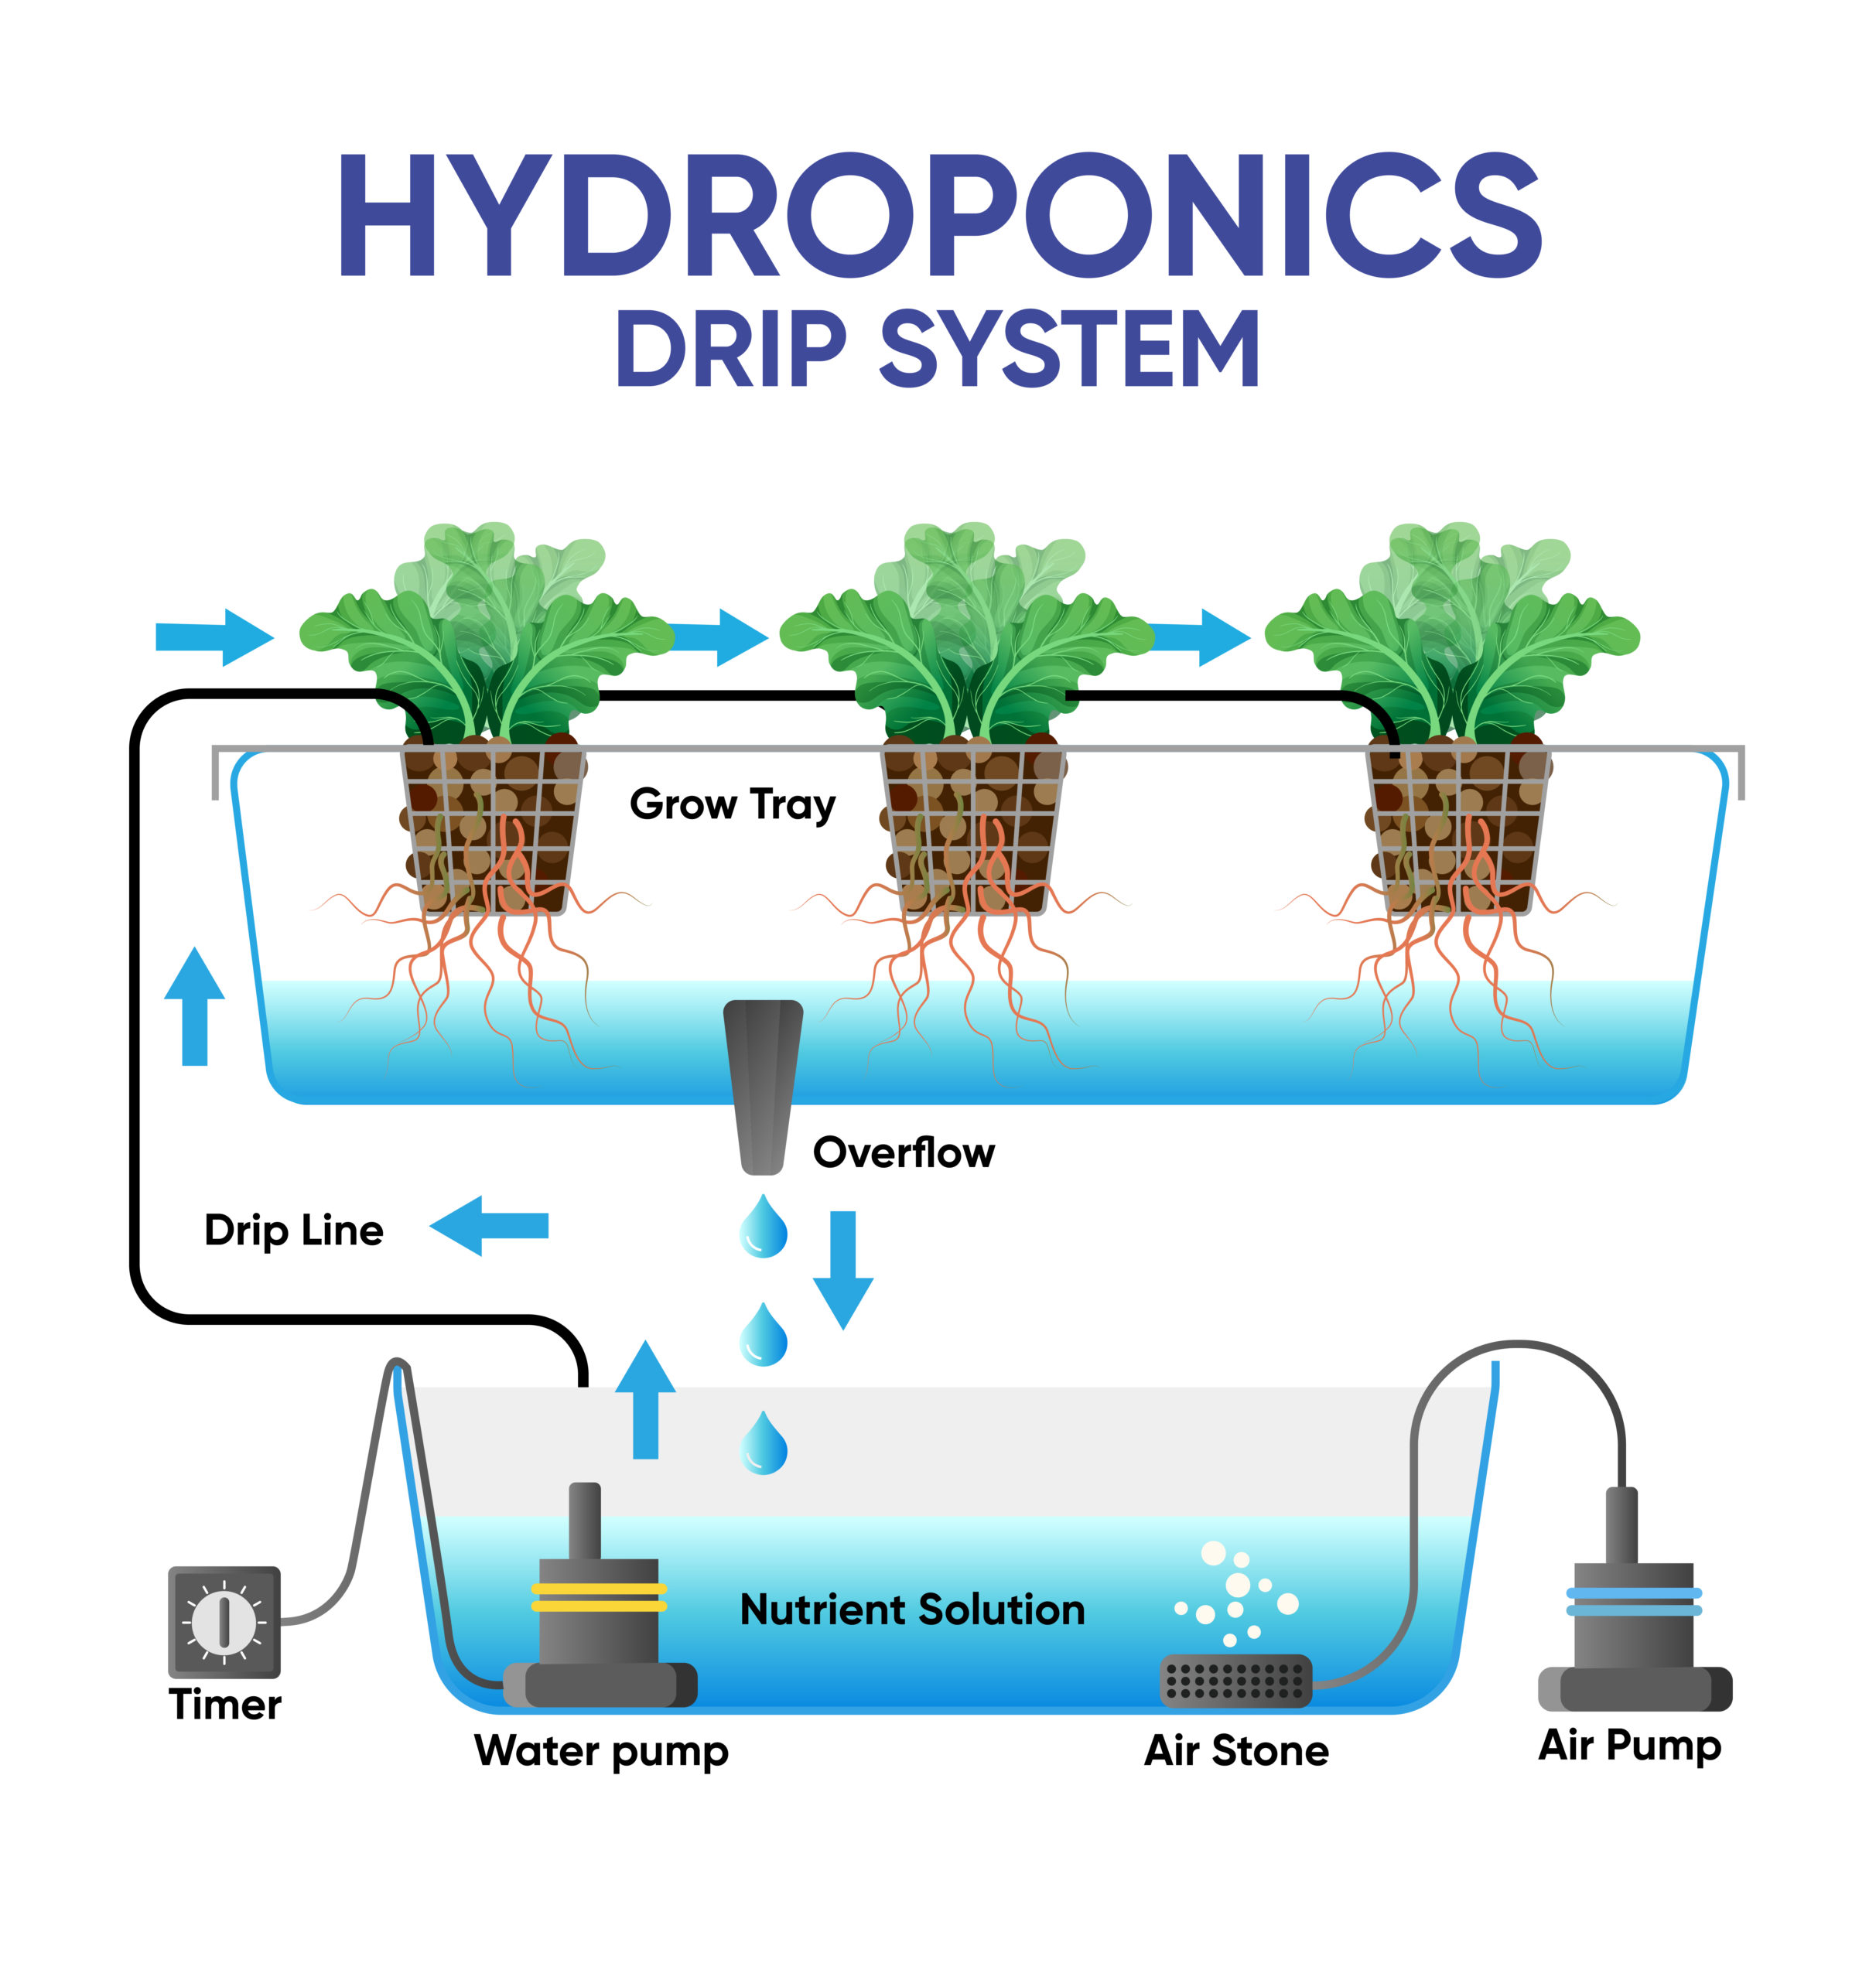 hypothesis on hydroponics